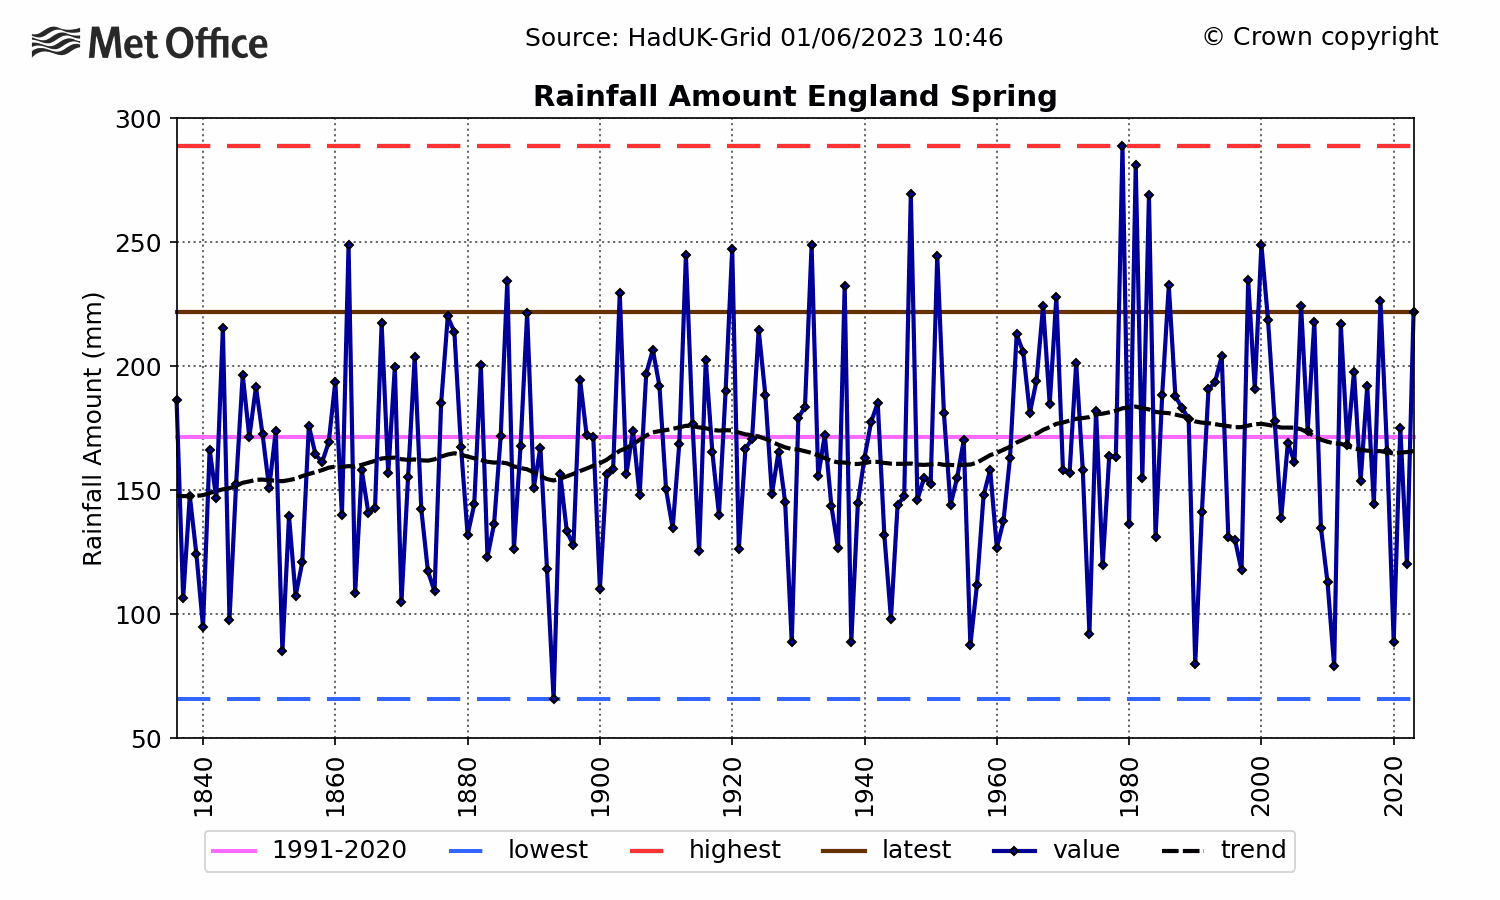 England Rainfall - Spring